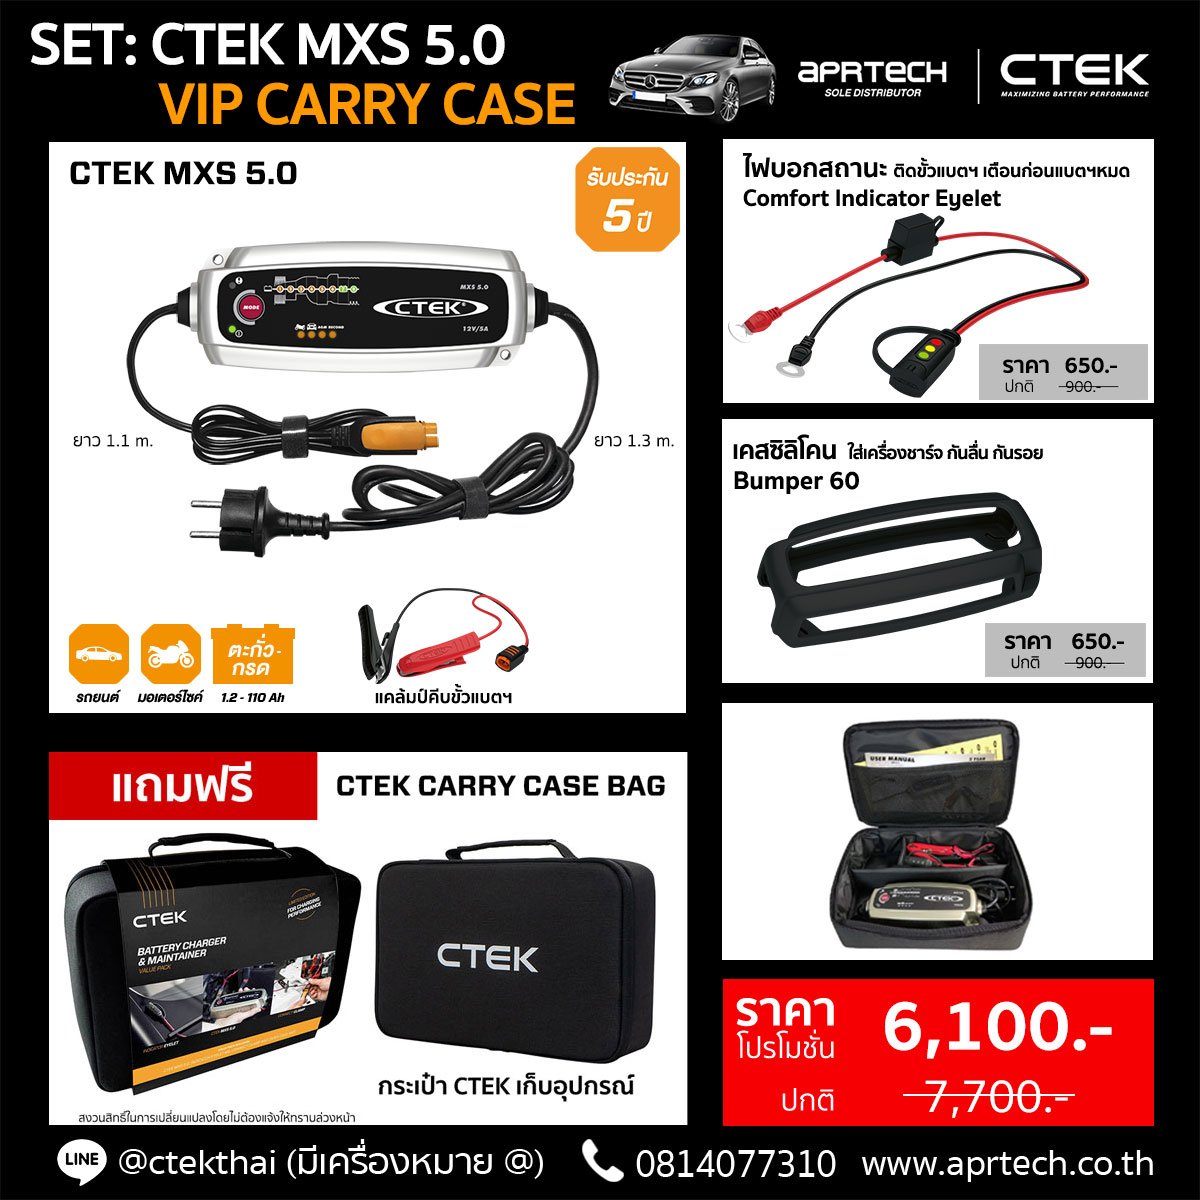 CTEK MXS 5.0 VIP CARRY CASE